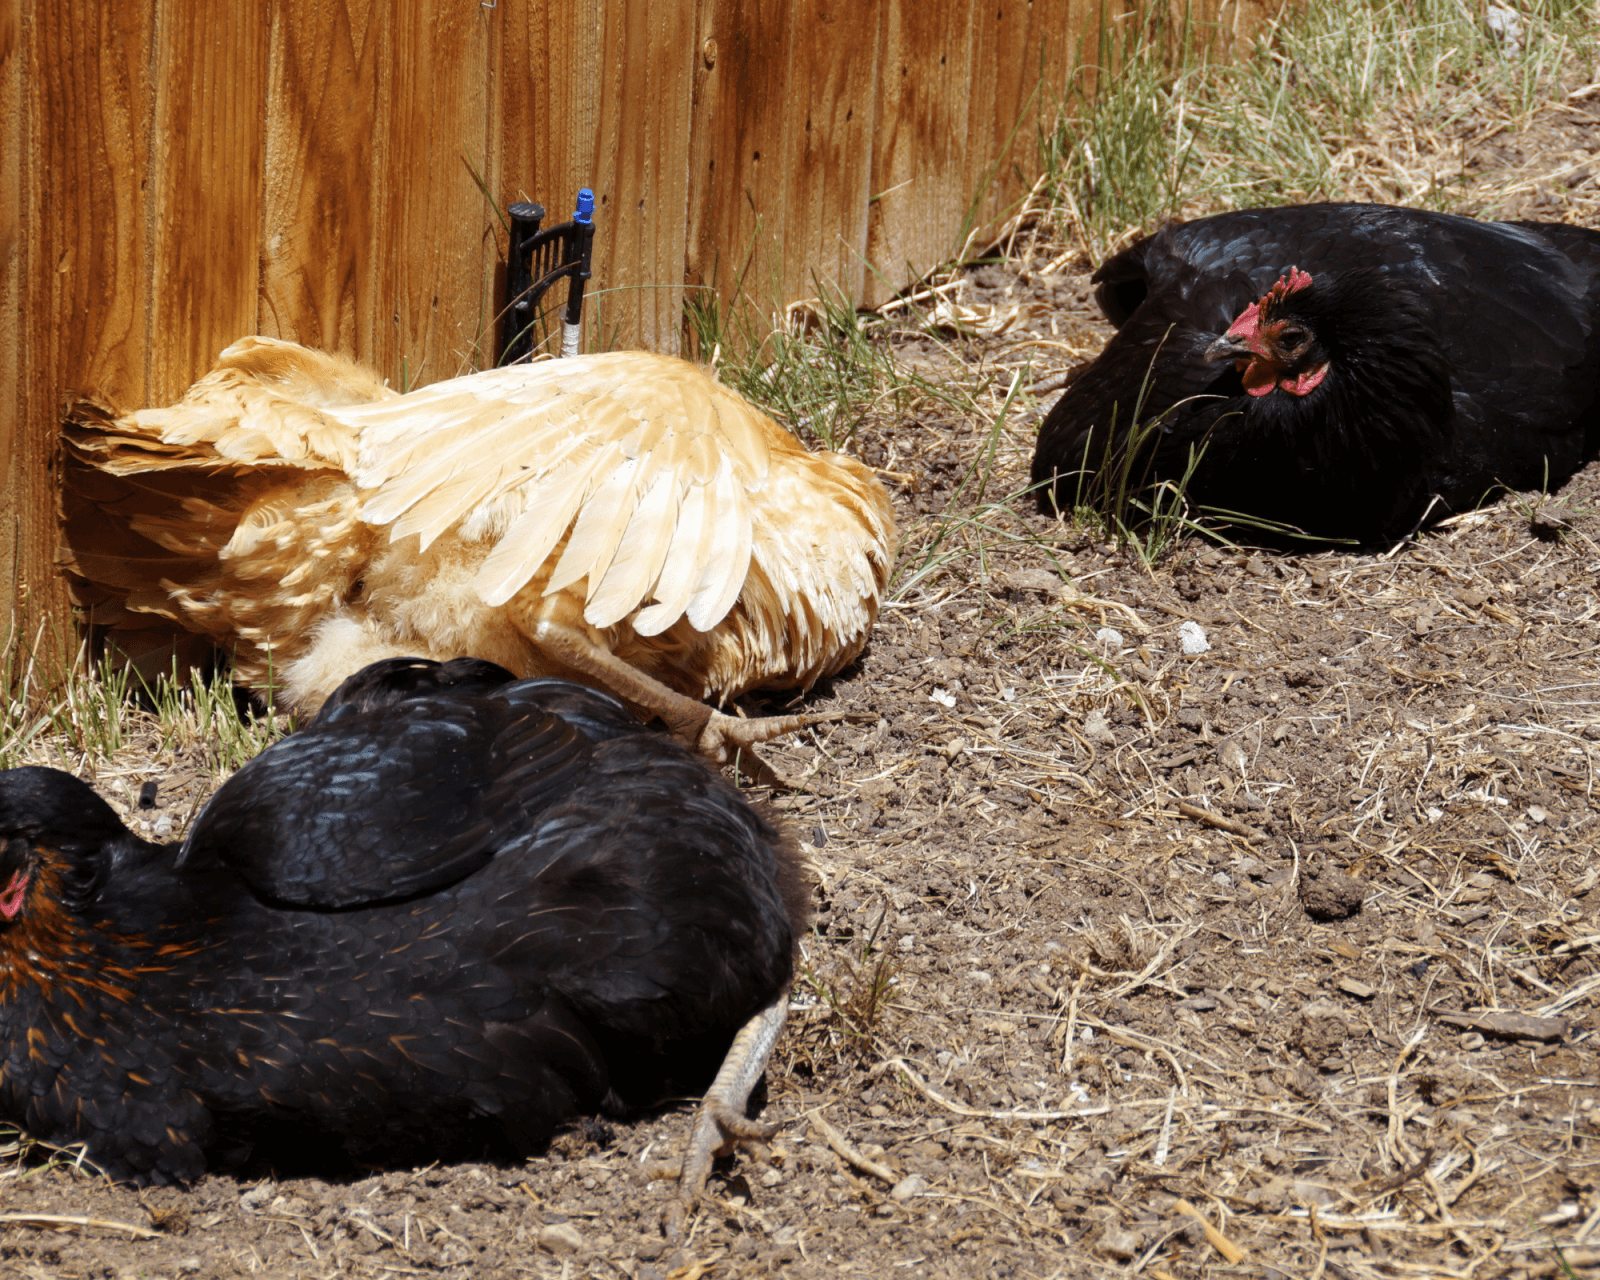 hens dust bathing